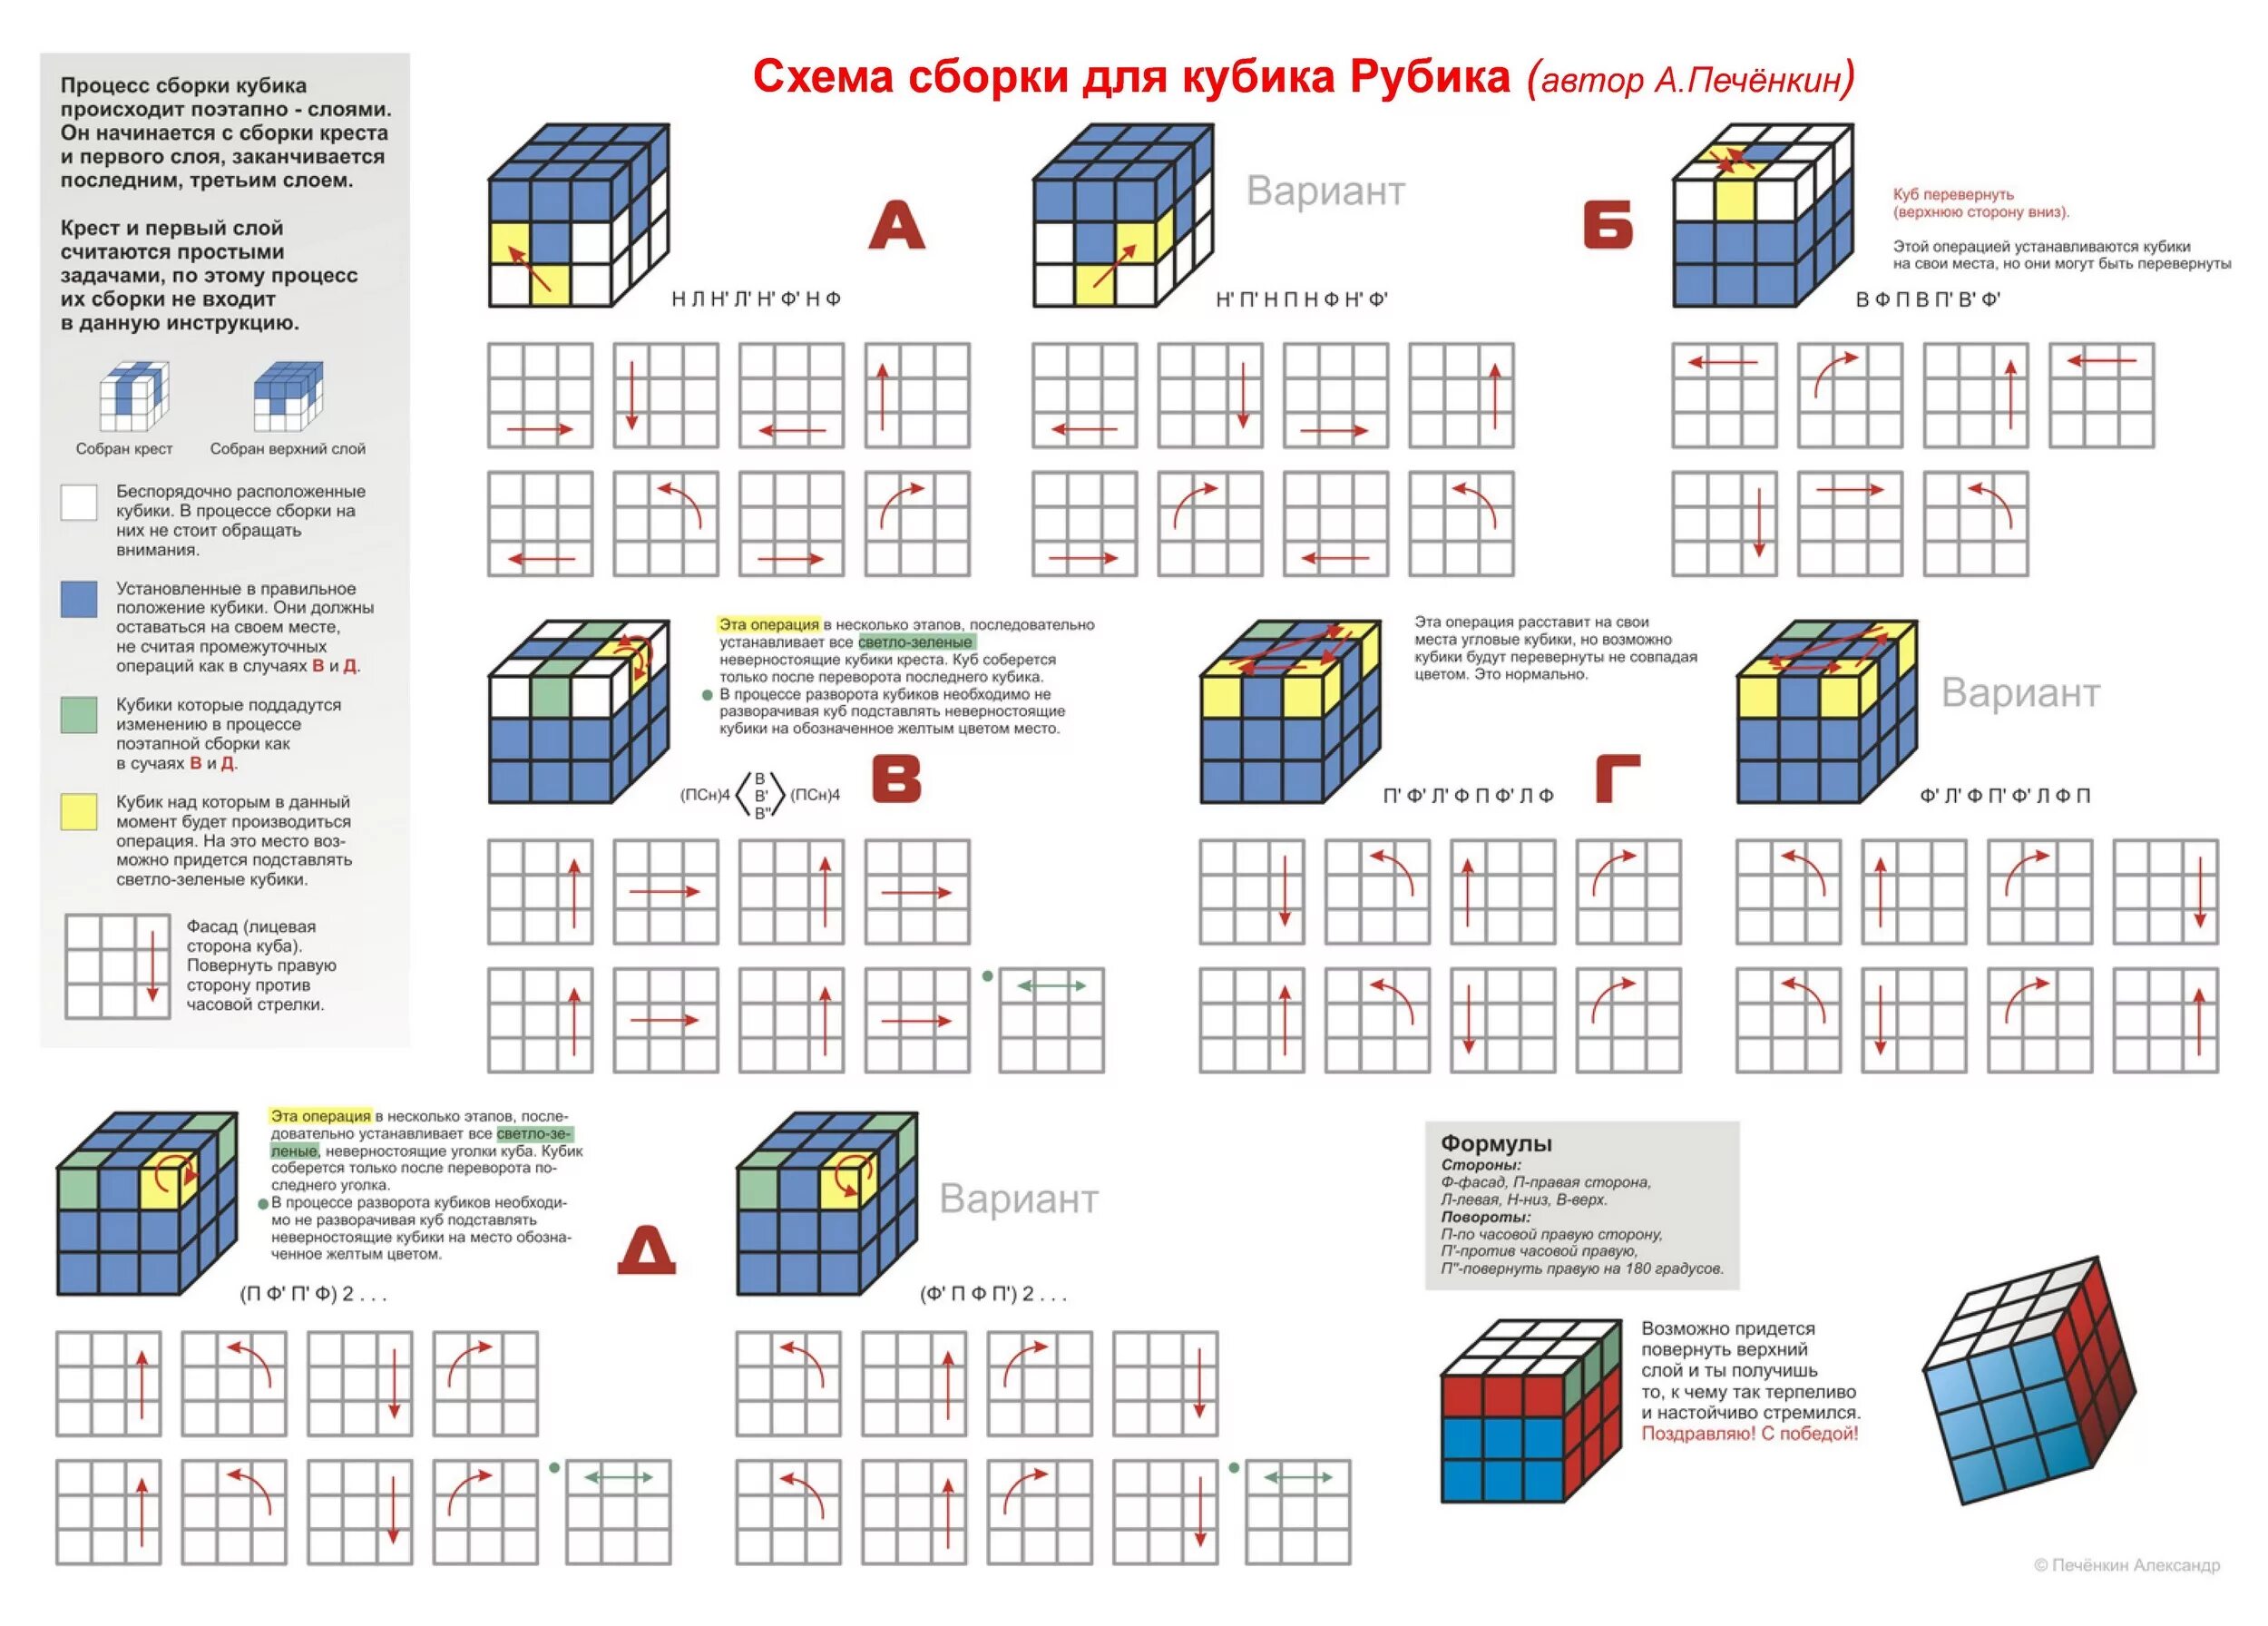 Сайт для сборки кубика. Схема собирания кубика Рубика 3х3 для начинающих. Формула кубика Рубика 3x3. Схема сборки кубика Рубика 3х3. Схема складывания кубика Рубика 3х3.